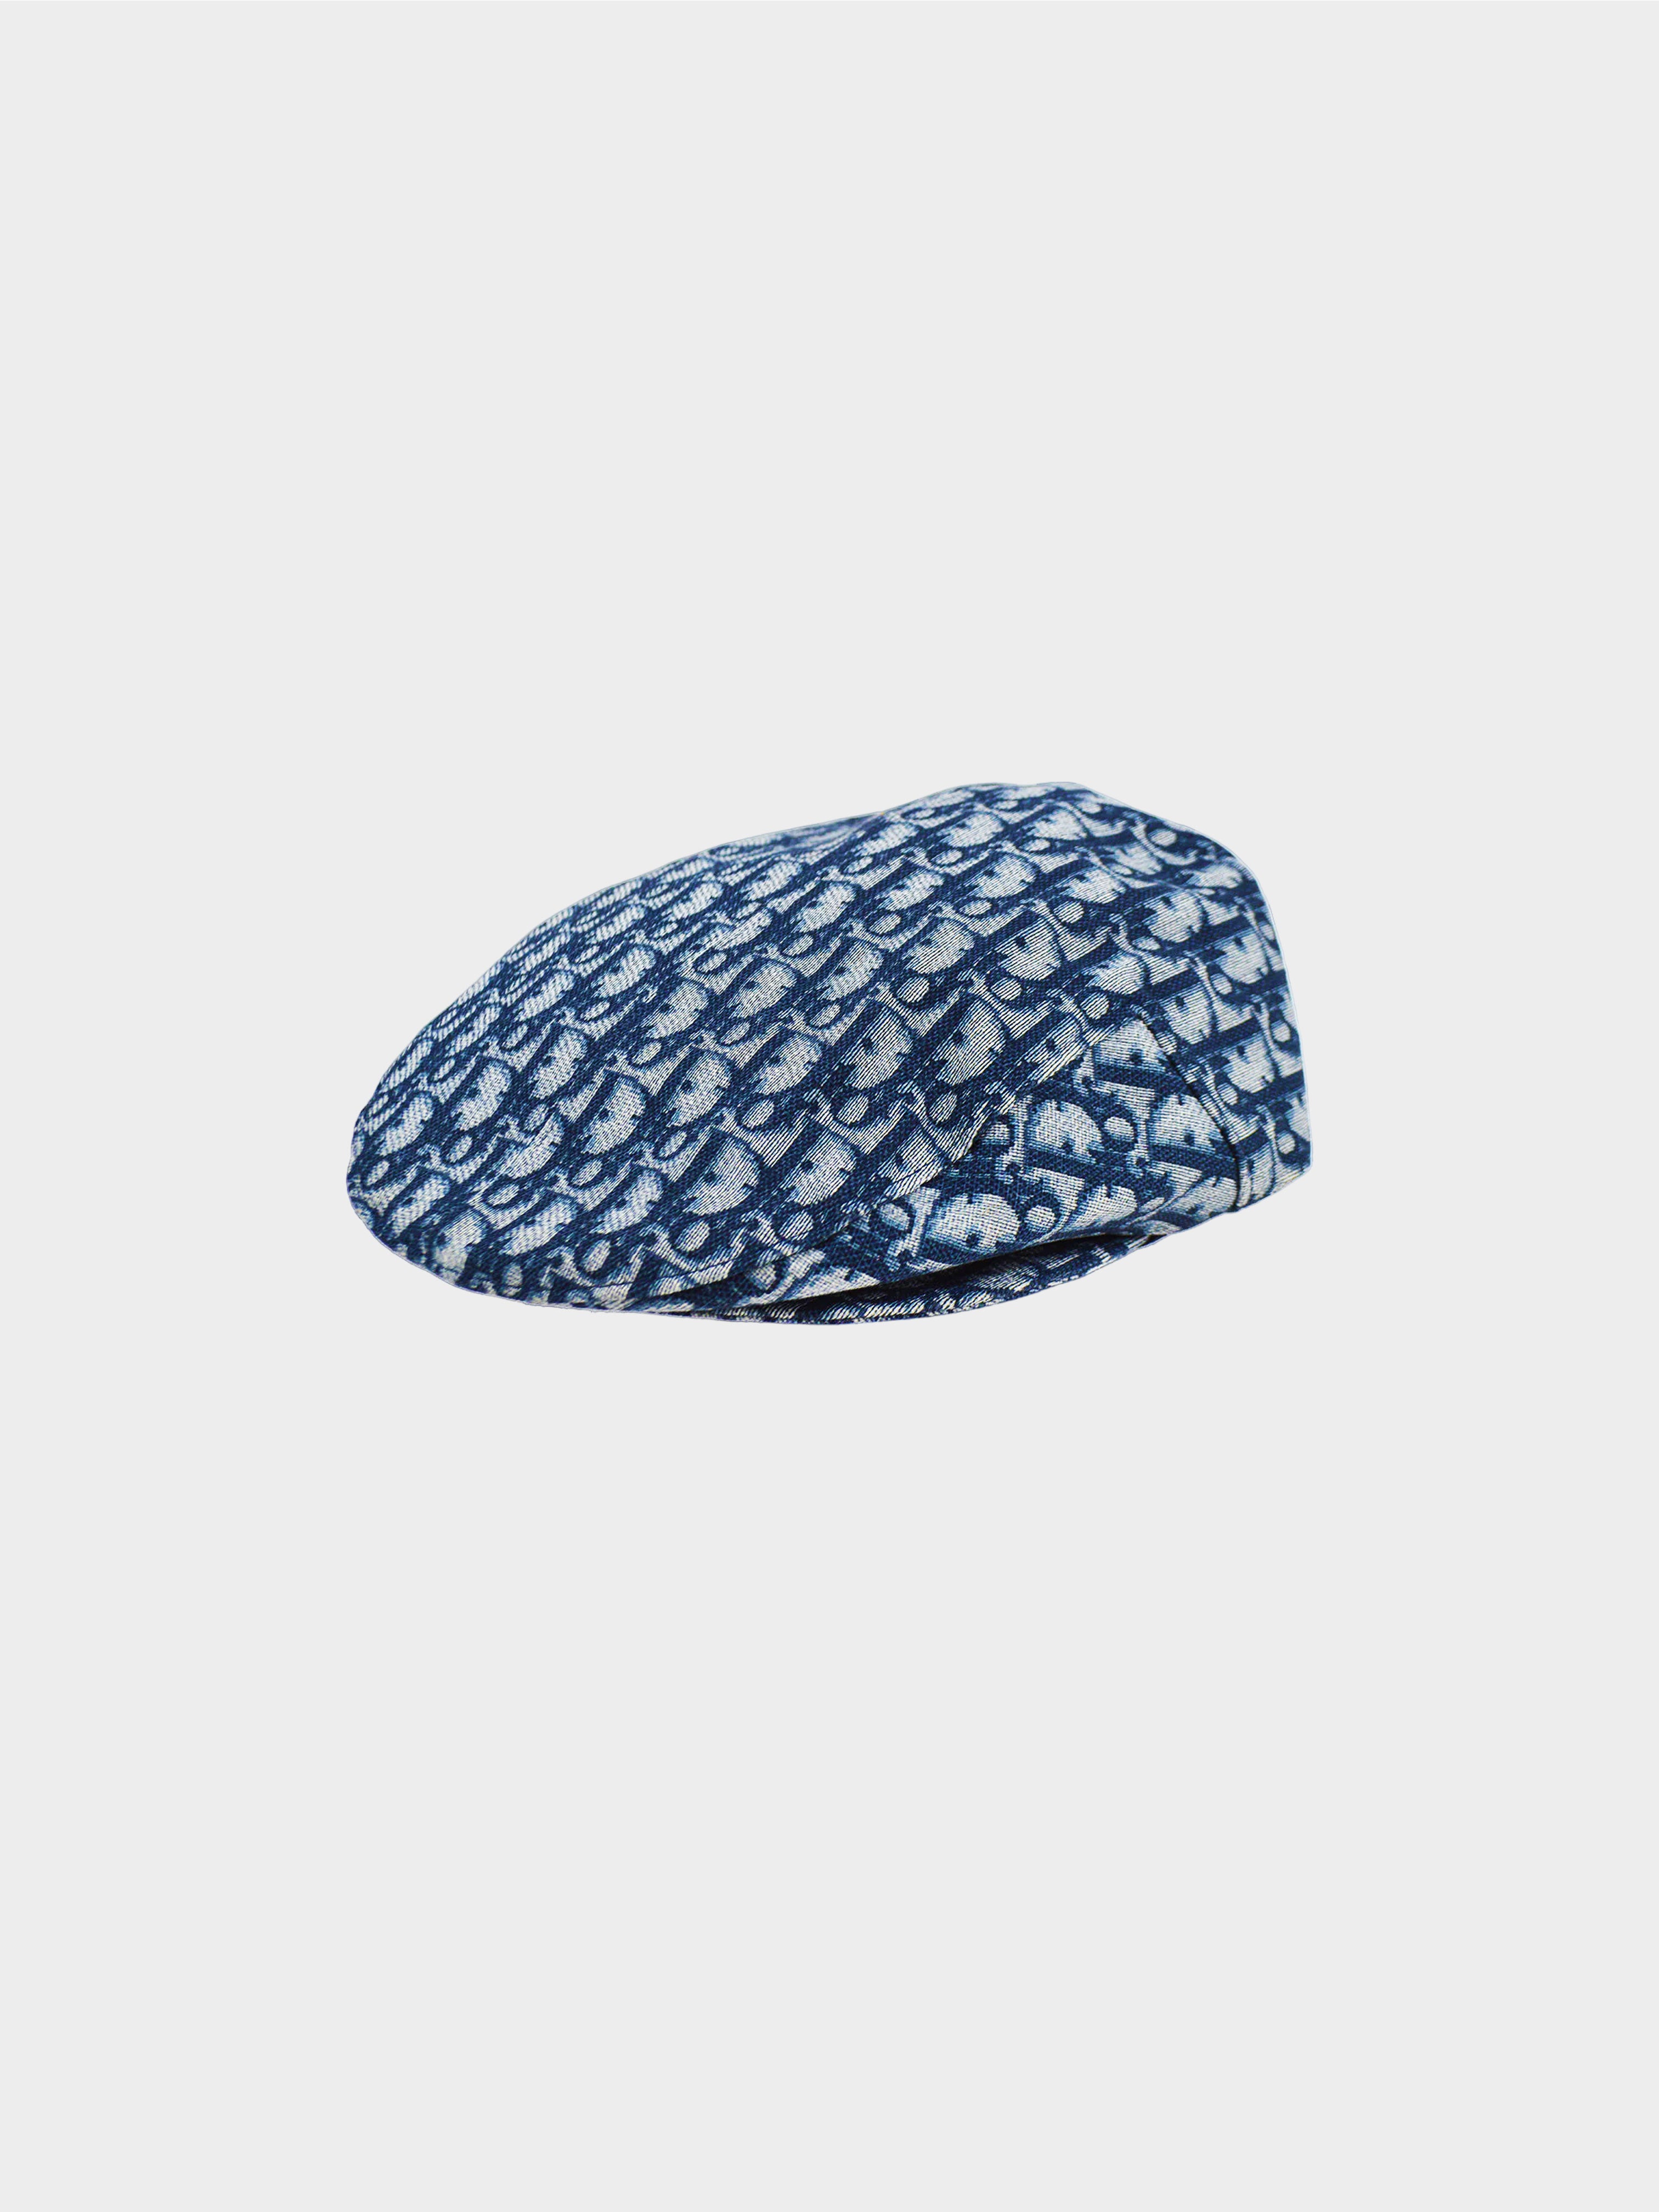 Christian Dior 2000s Navy Blue Diorissimo Casket Hat